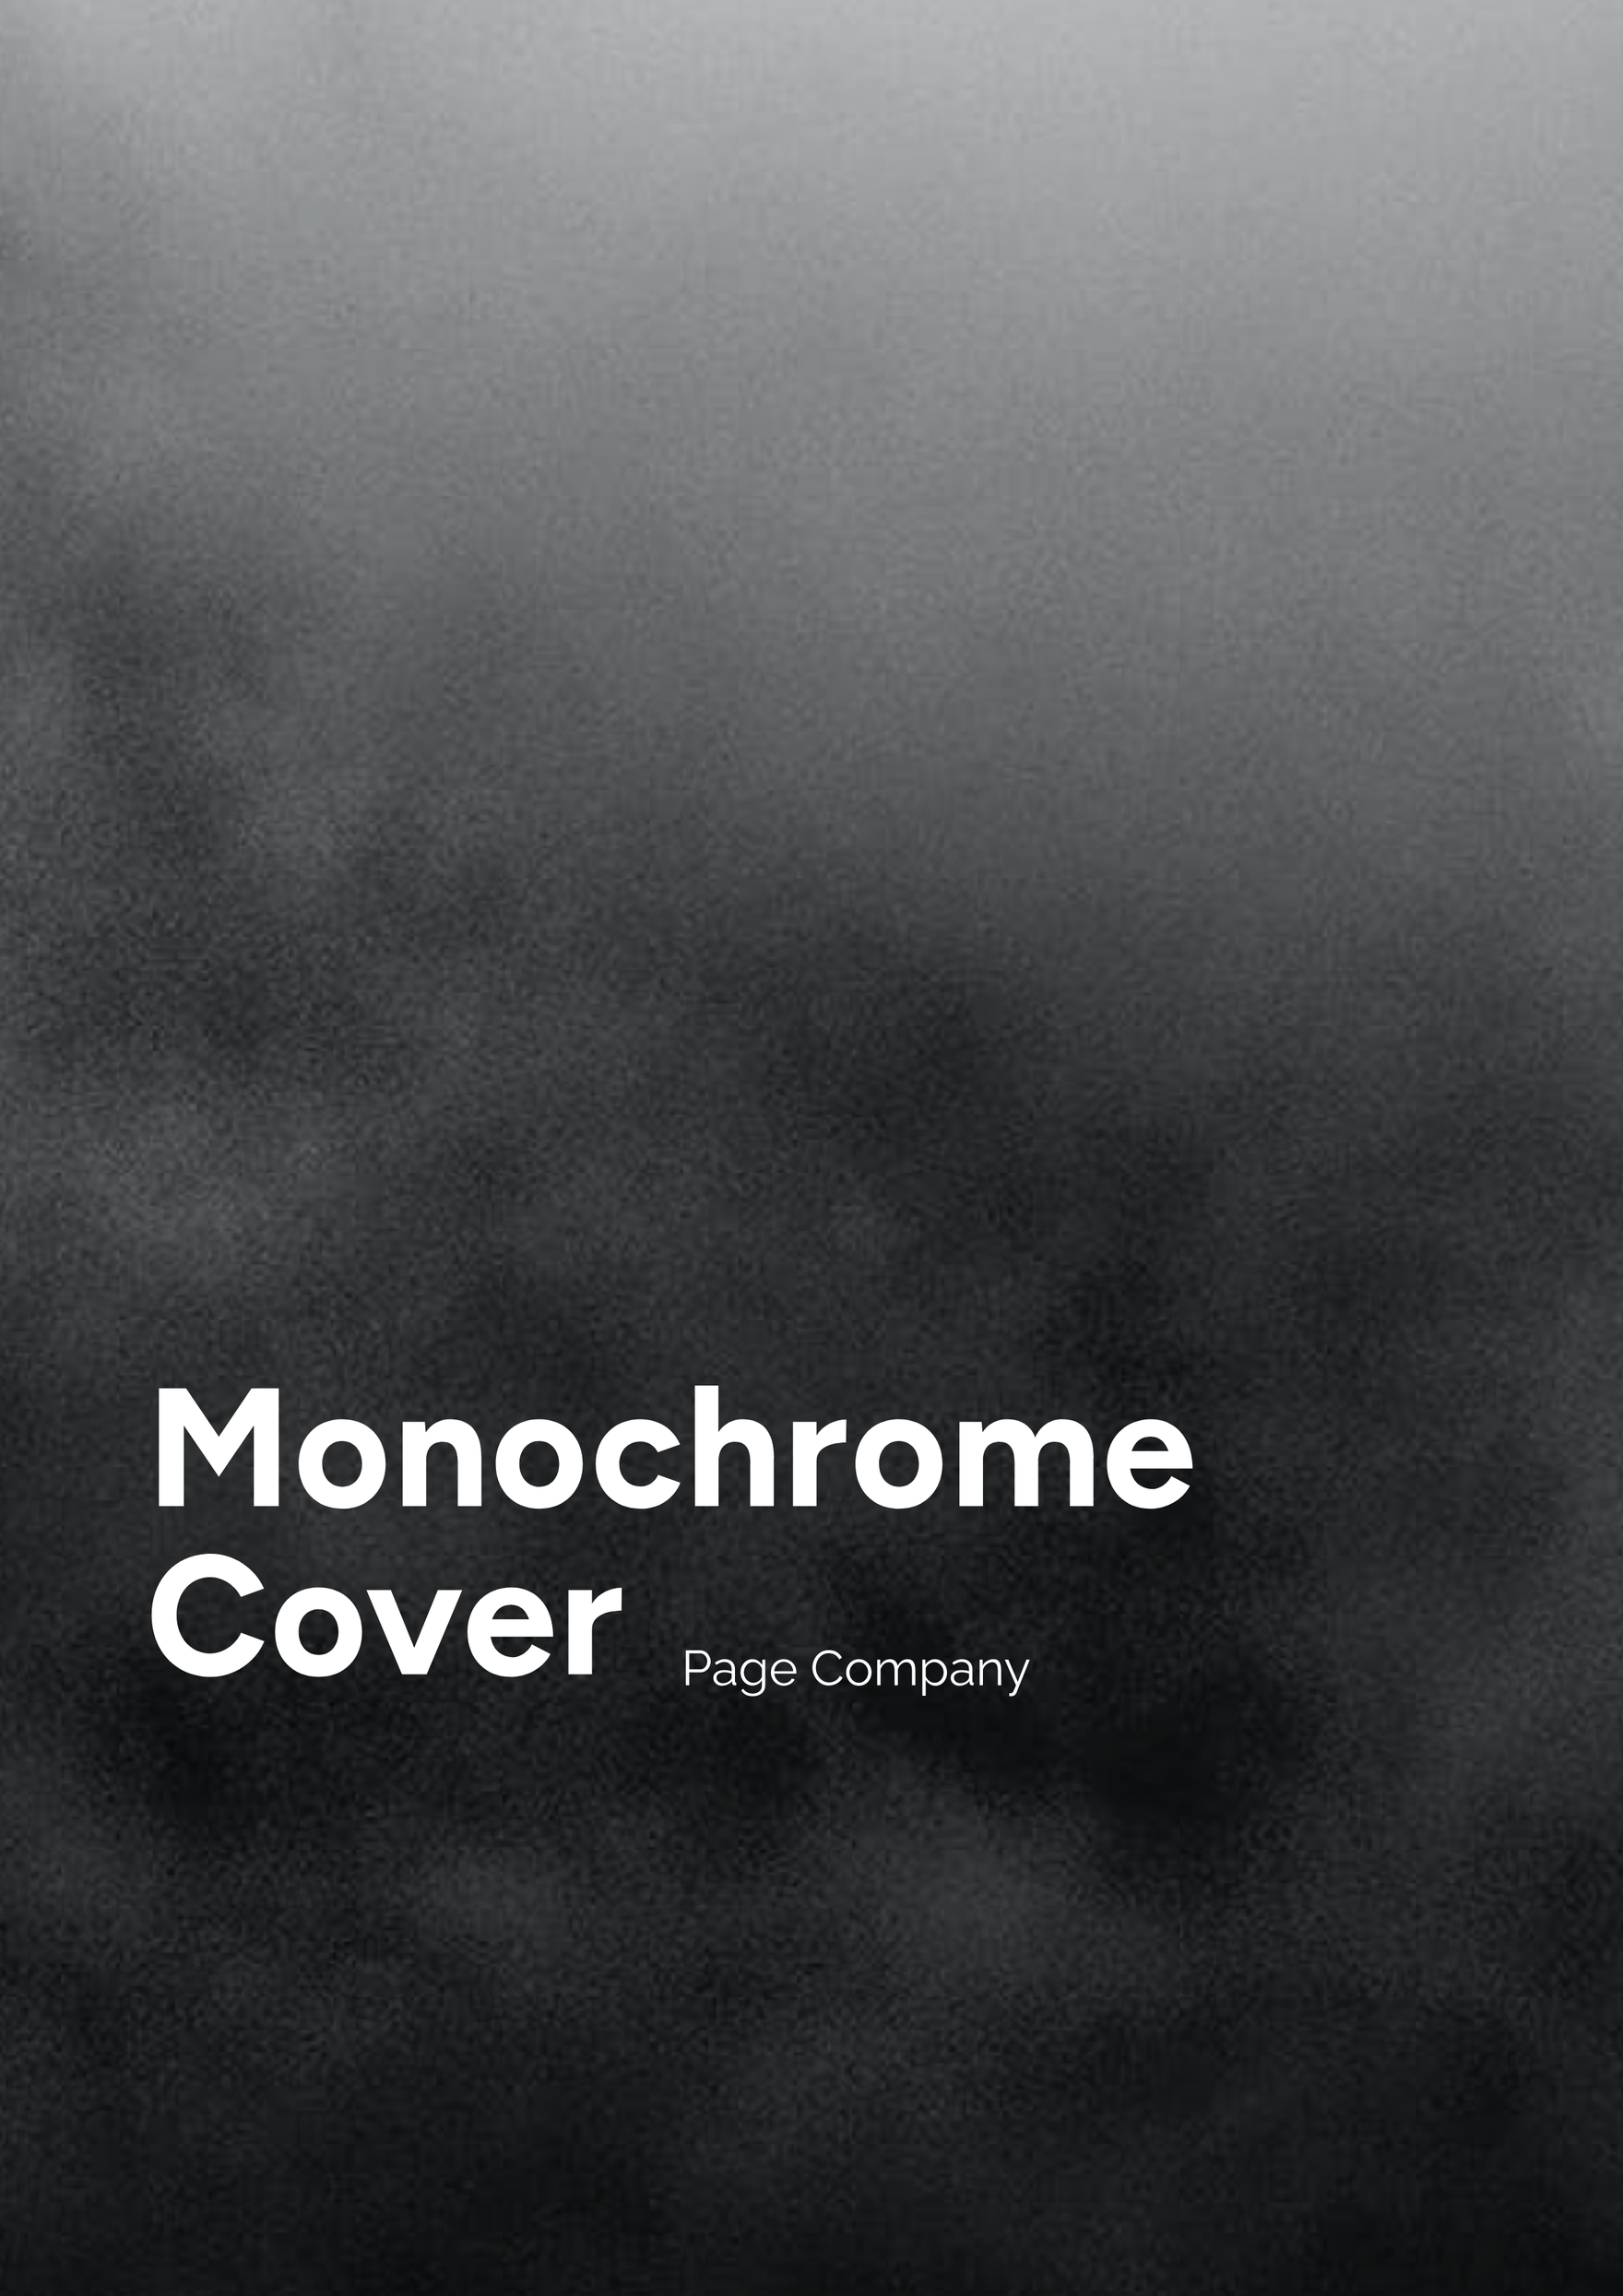 Monochrome Cover Page Company